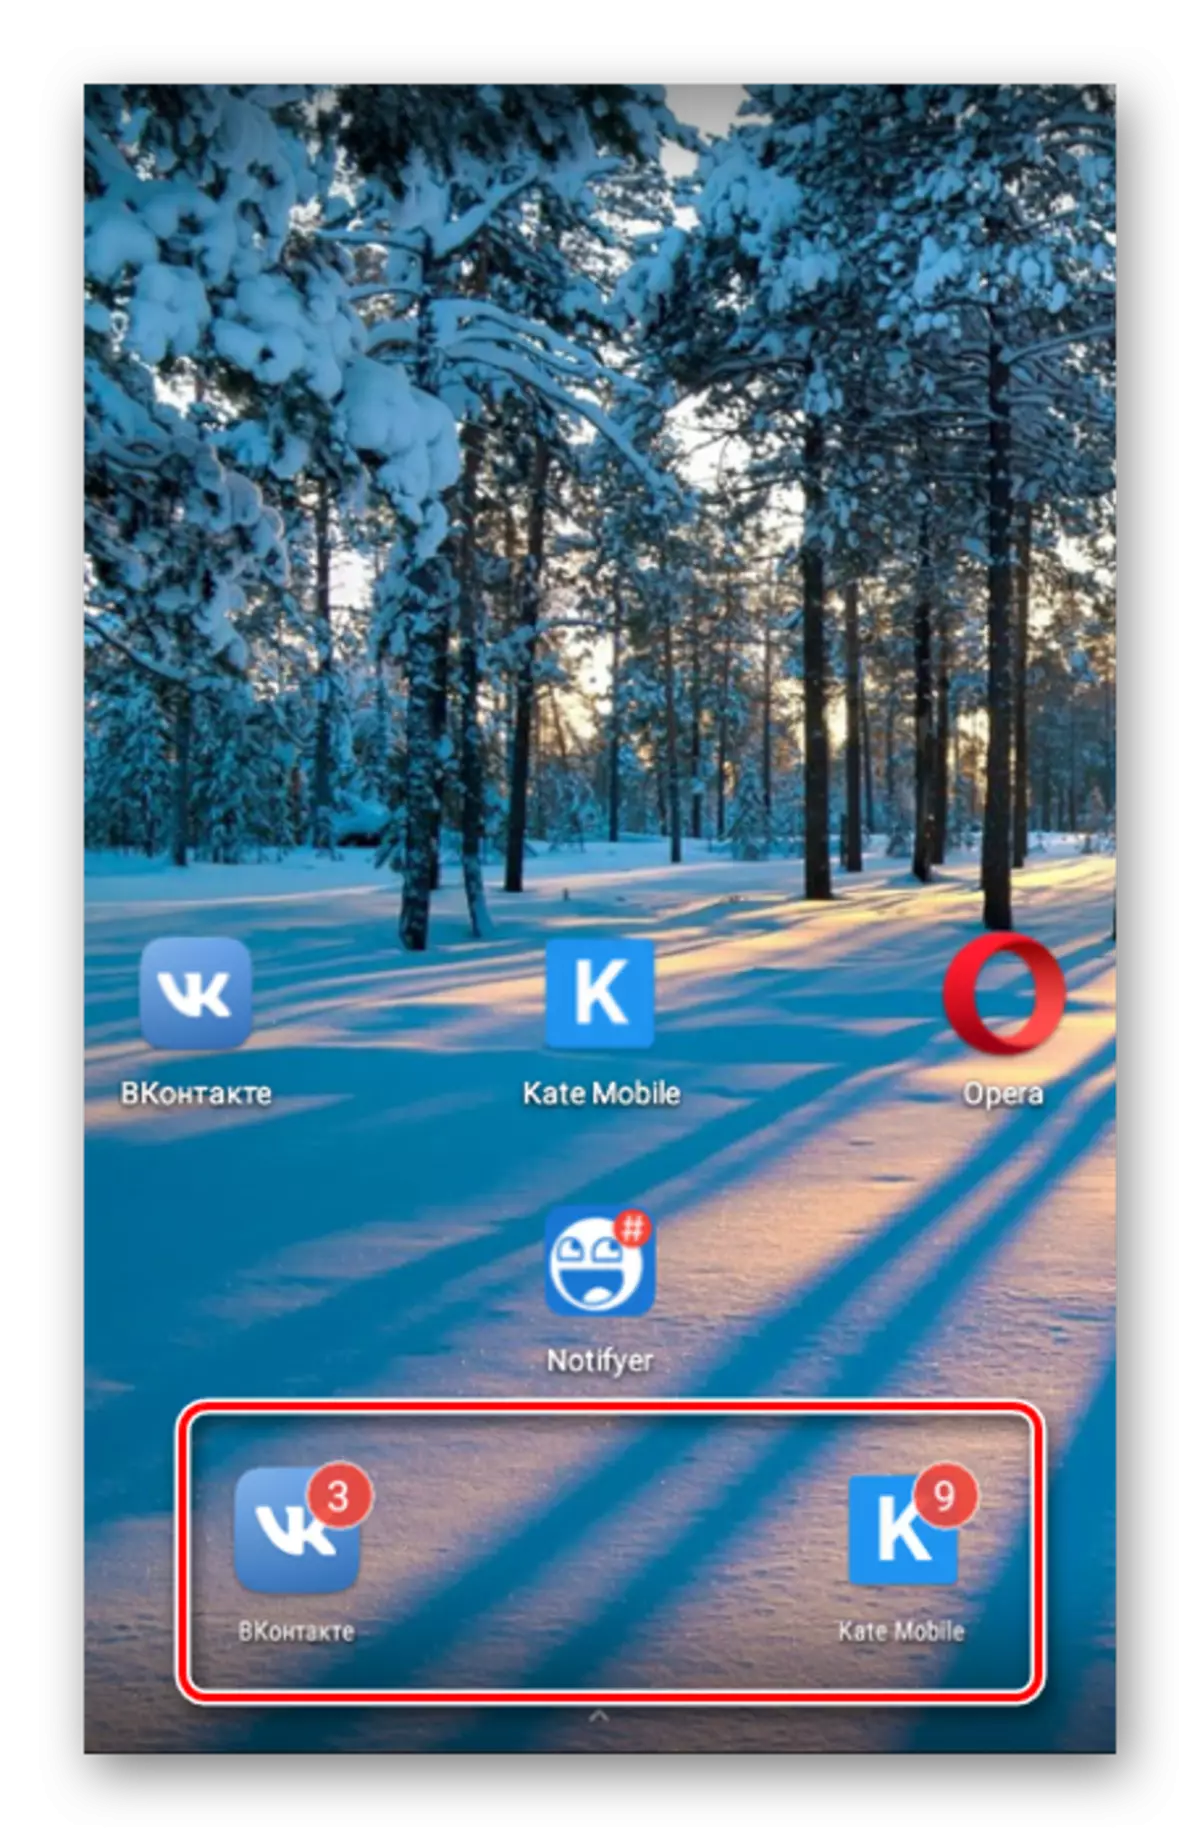 Android లో Vkontakte కోసం విజయవంతమైన జోడించడం మీటర్